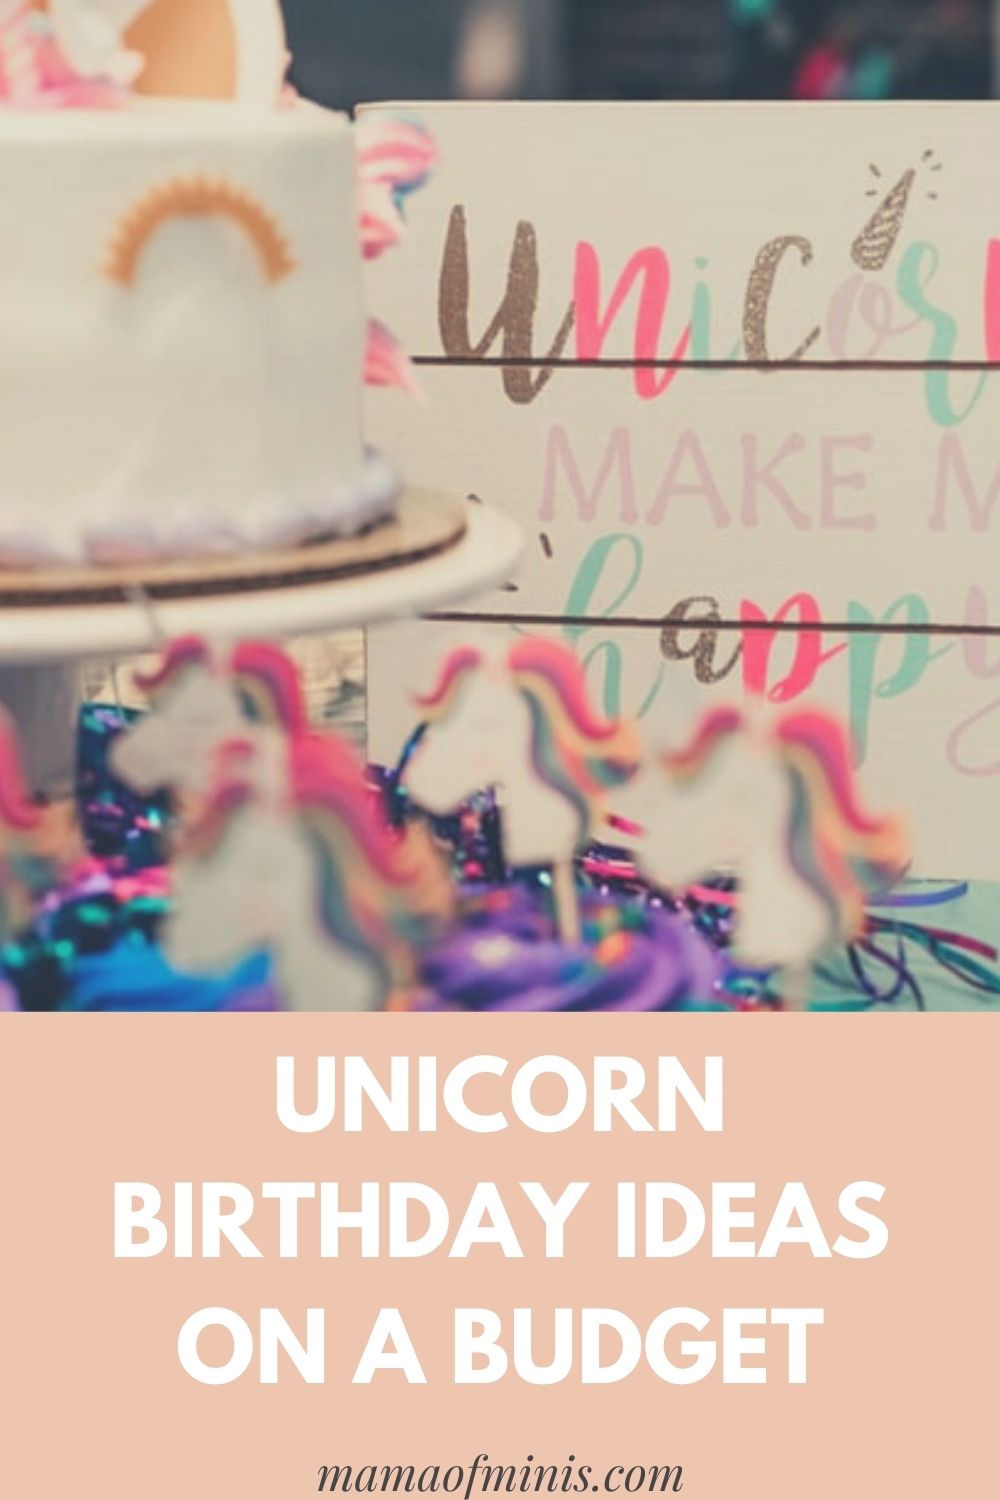 Unicorn Birthday Ideas on a Budget